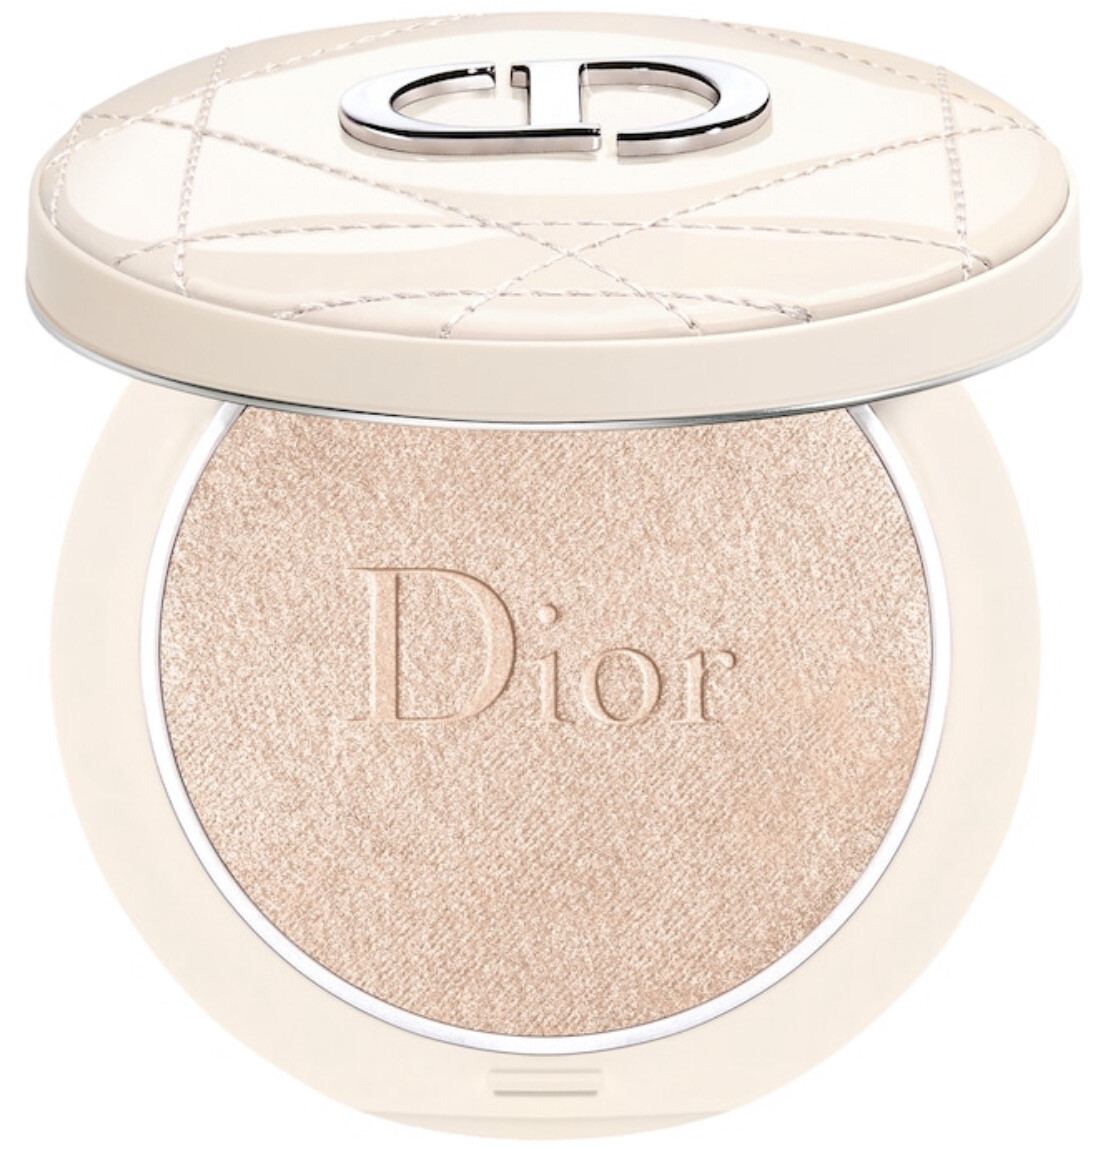 Dior - Dior Forever Couture Luminizer Highlighter Powder | 01 Nude Glow - a golden bronze